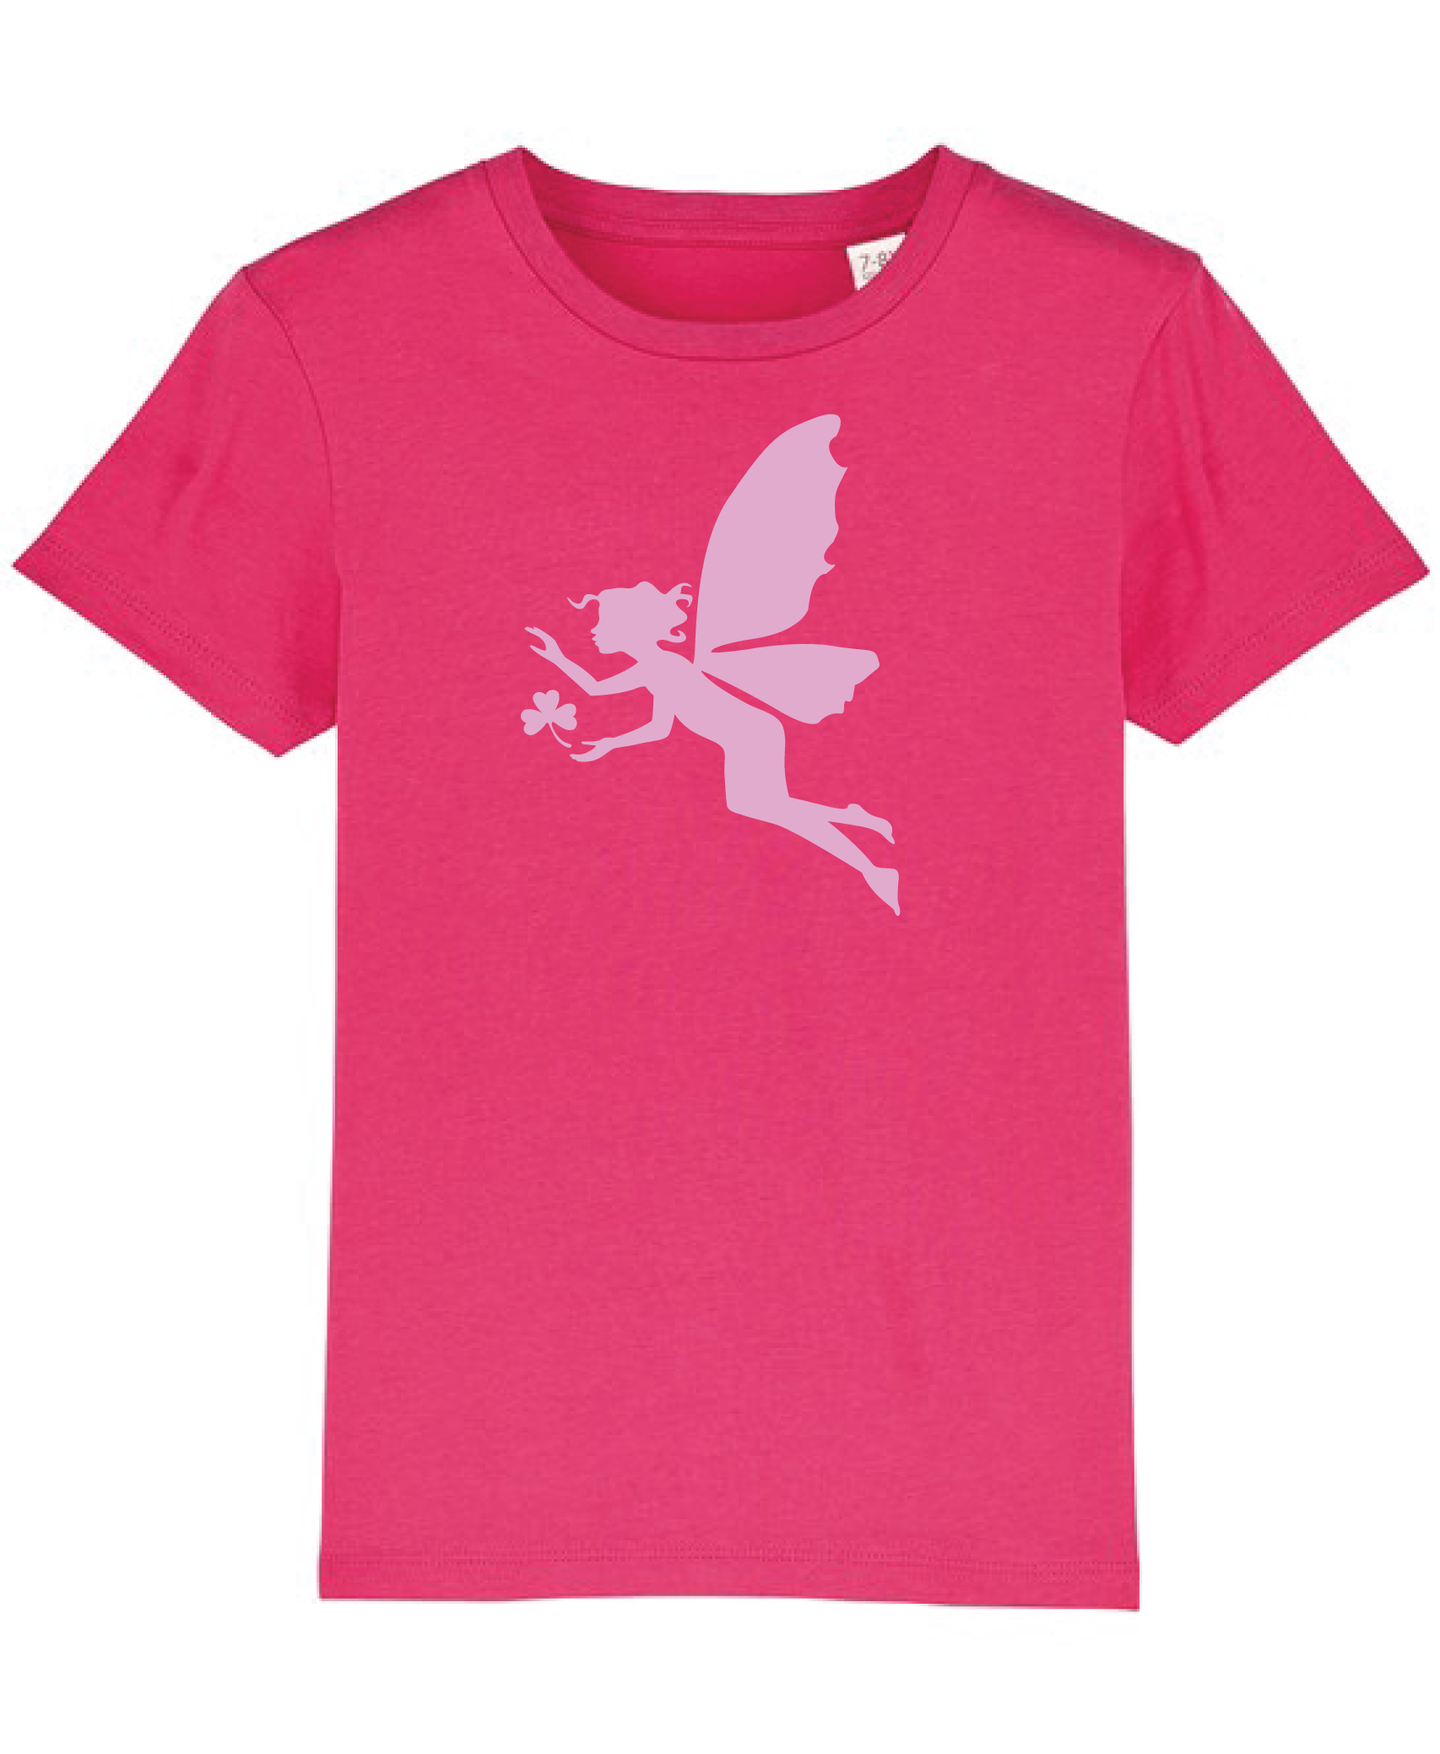 Girls New Raspberry Organic tee shirt with Fairy flock print.